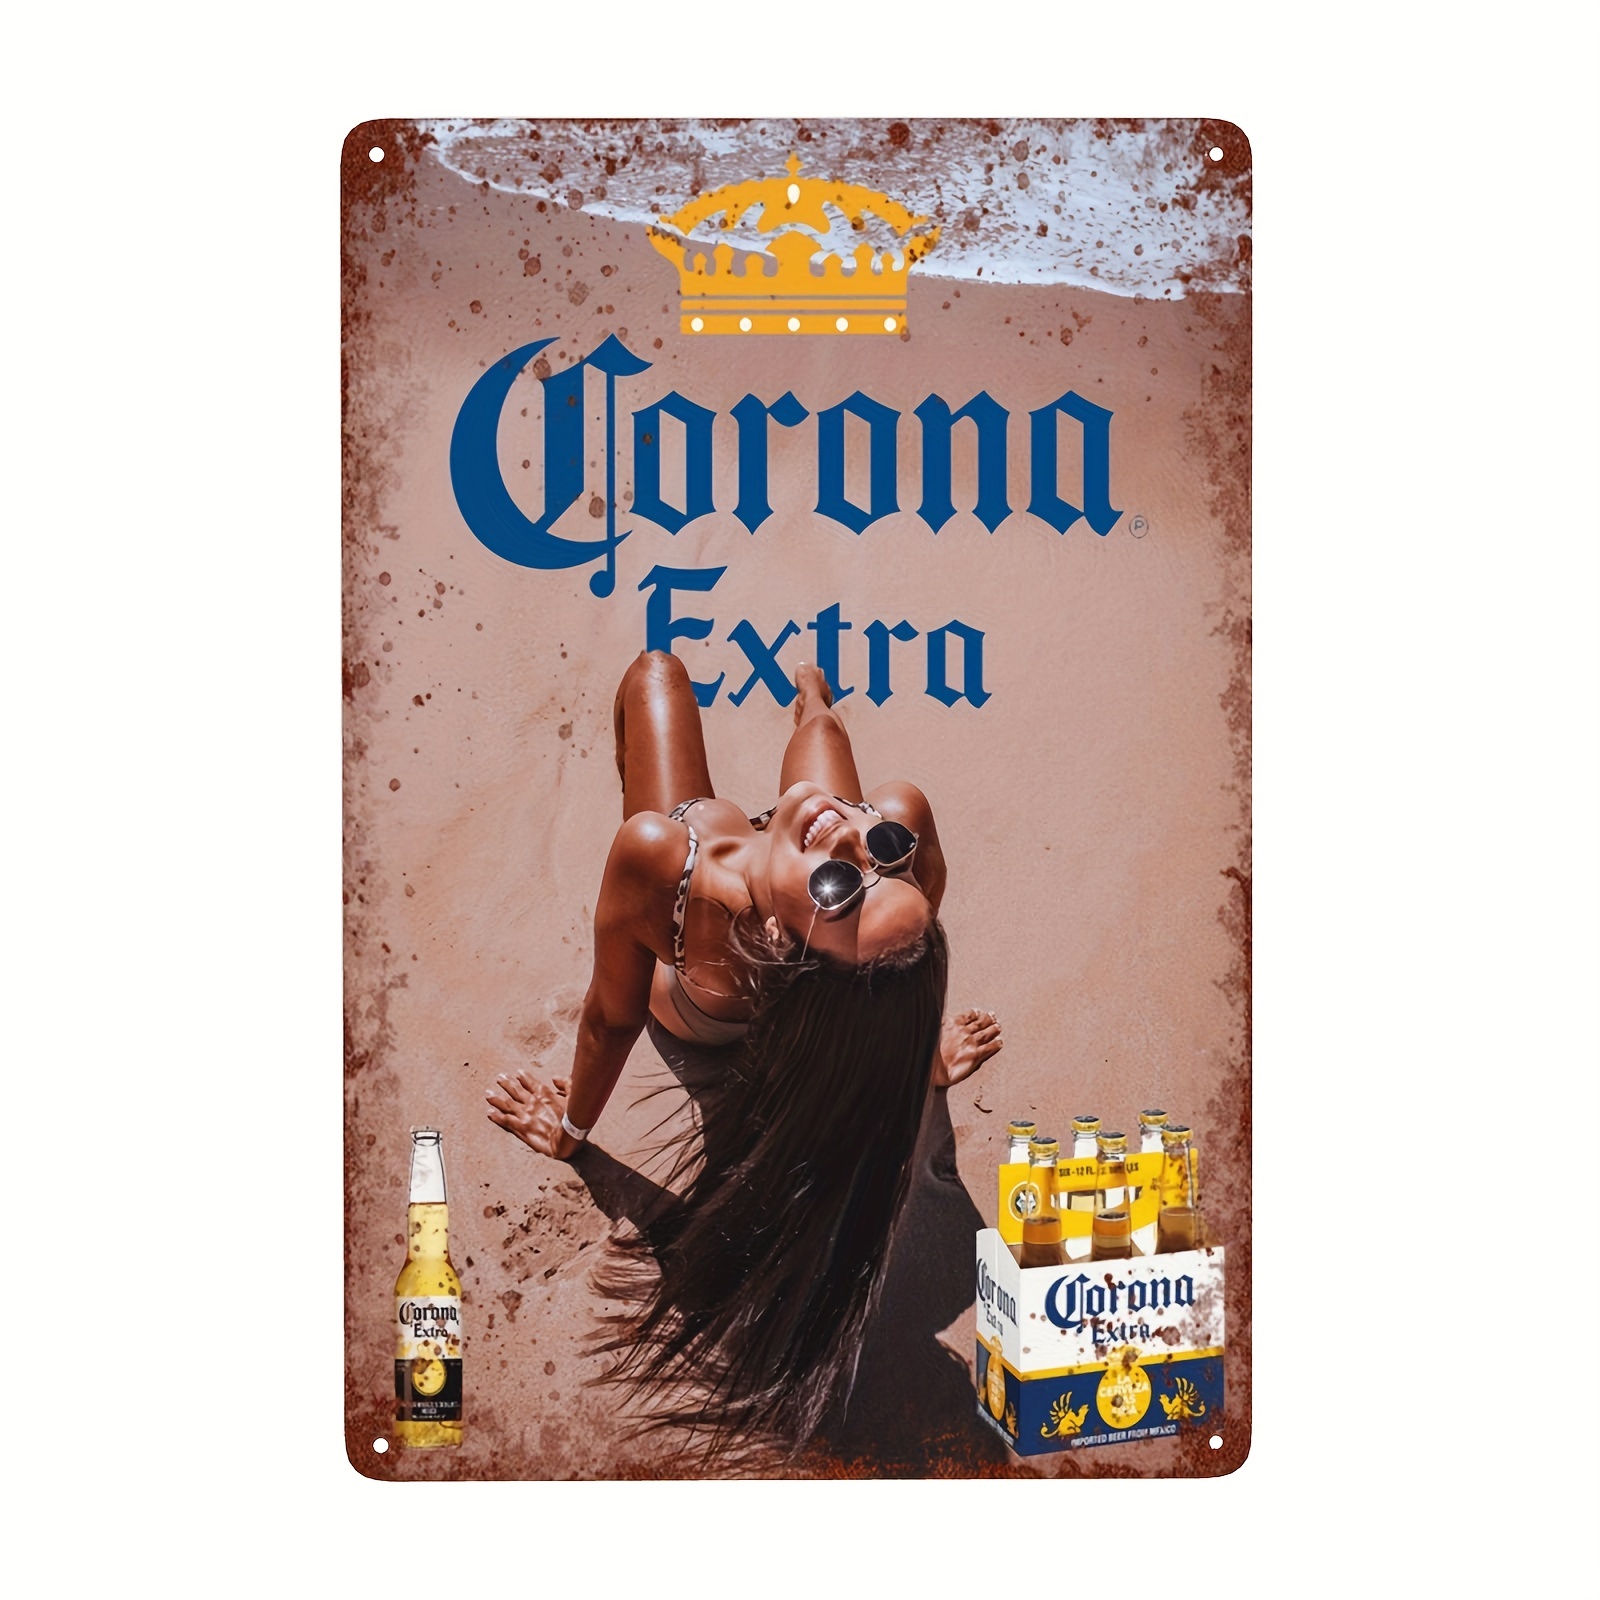 CORONA EXTRA Metal Tin Sign Vintage Beer Poster Decorative Plaques